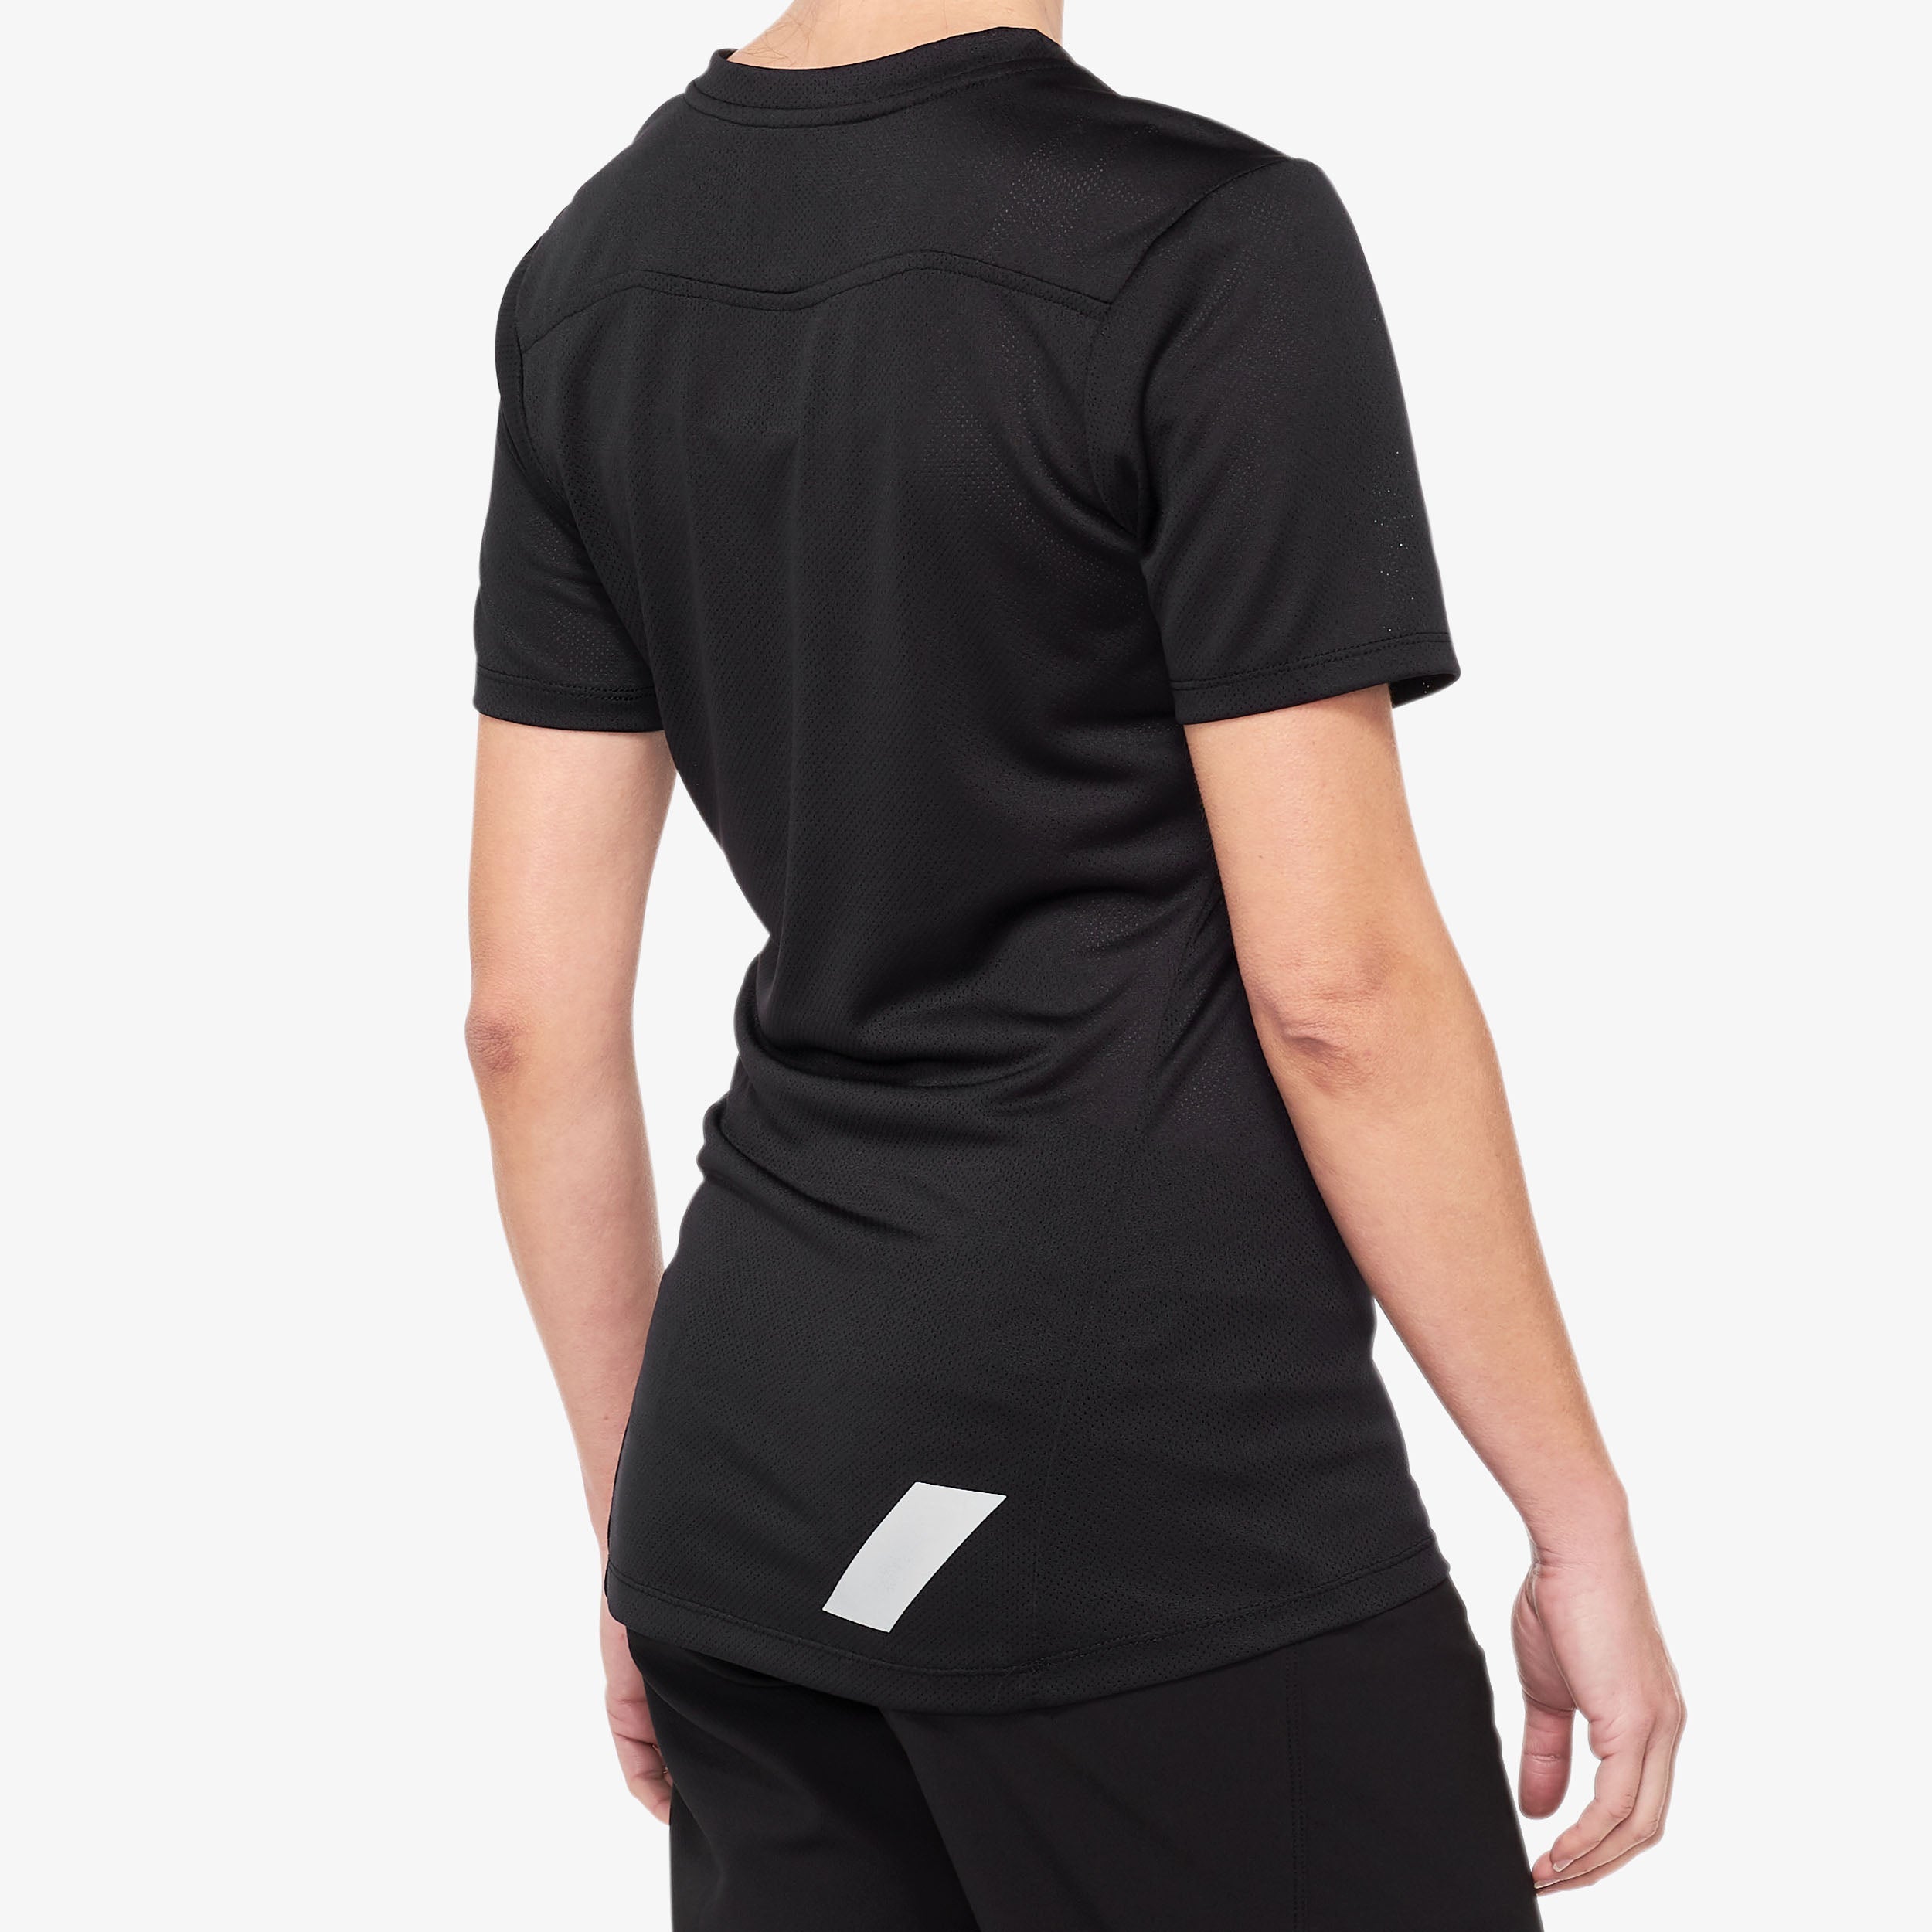 RIDECAMP Women's Short Sleeve Jersey Black/Grey - Secondary